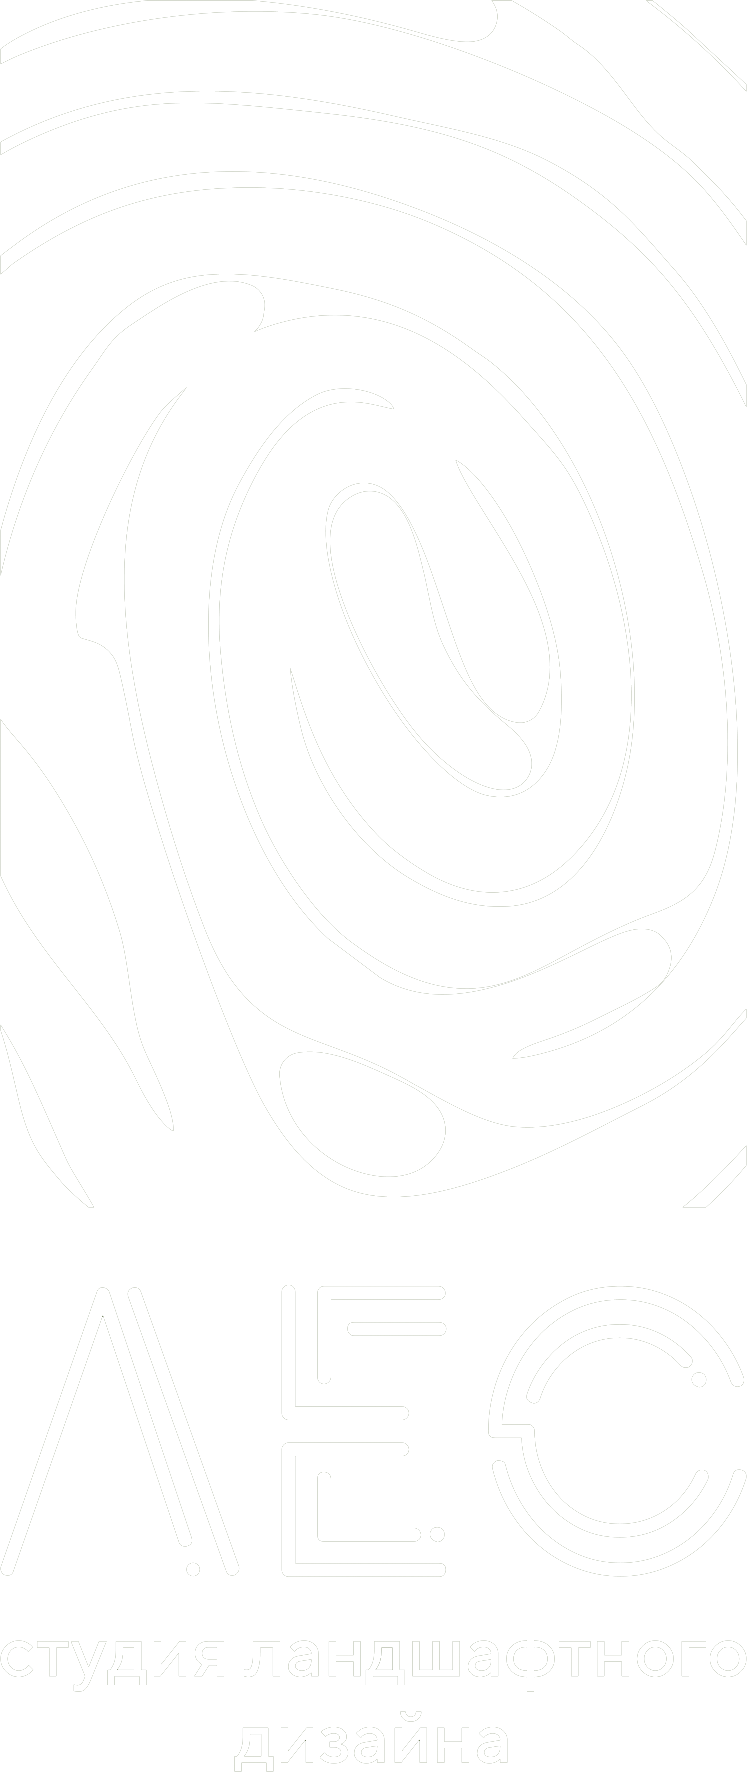 Логотип студии ландшафтного дизайна ЛЕС